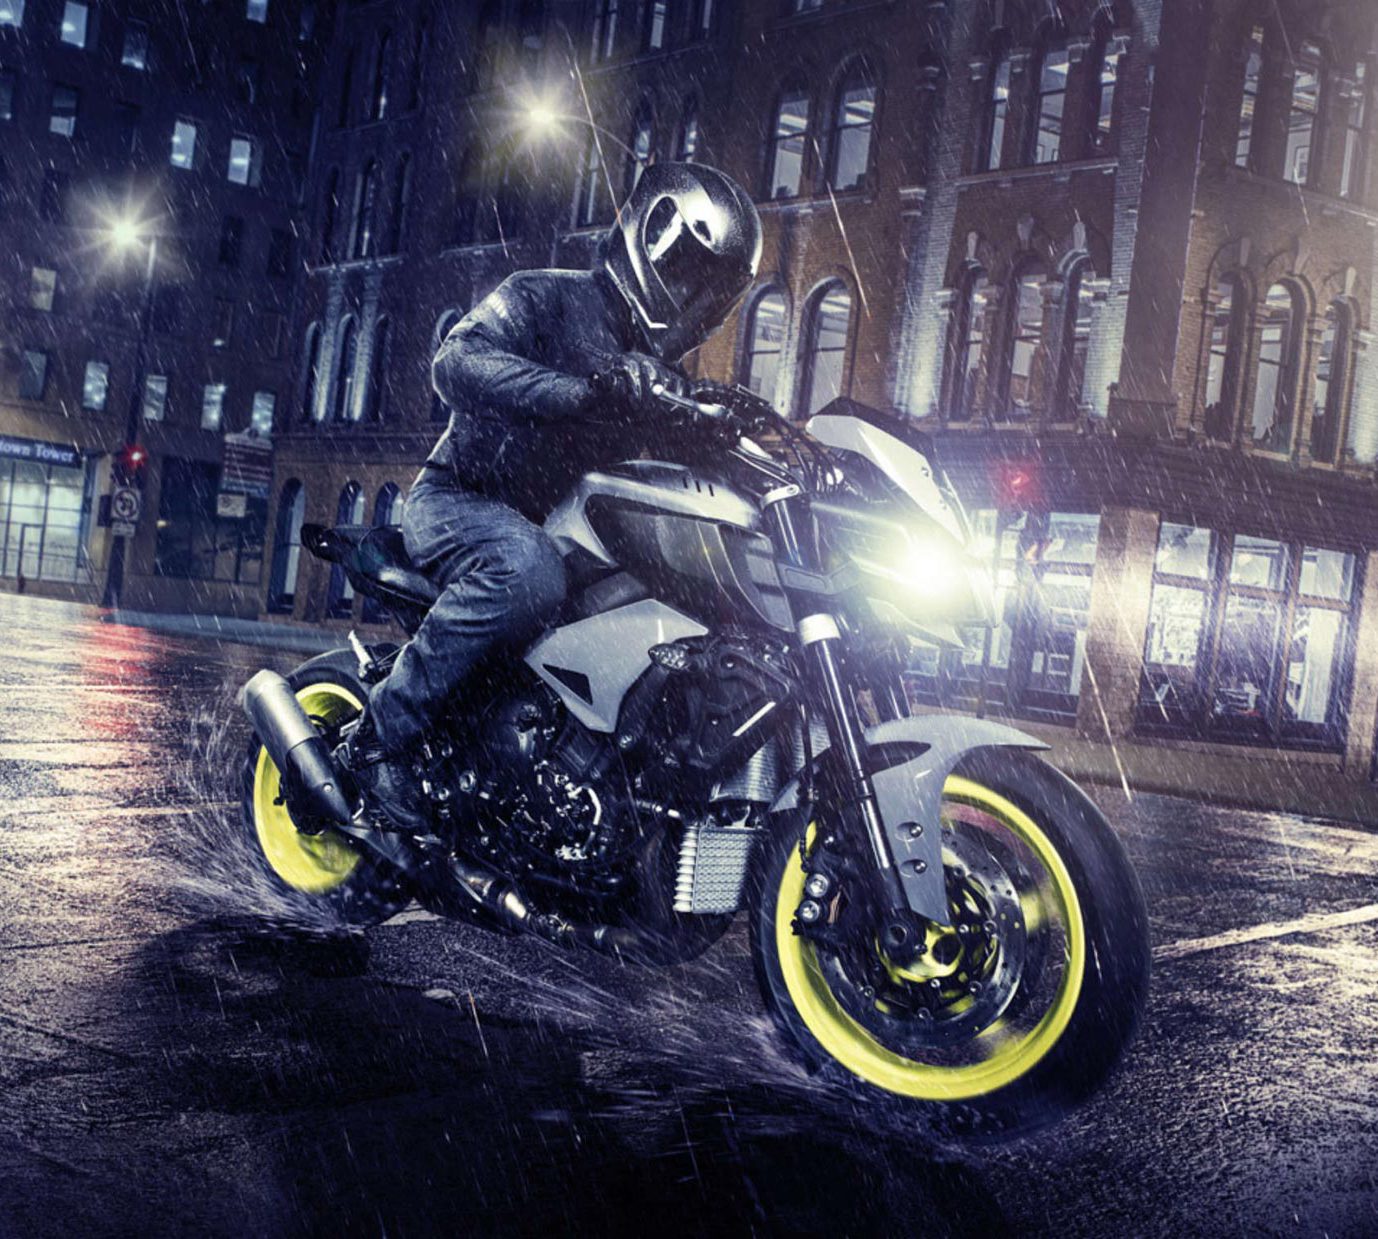 Rider in full gear during a rain shower